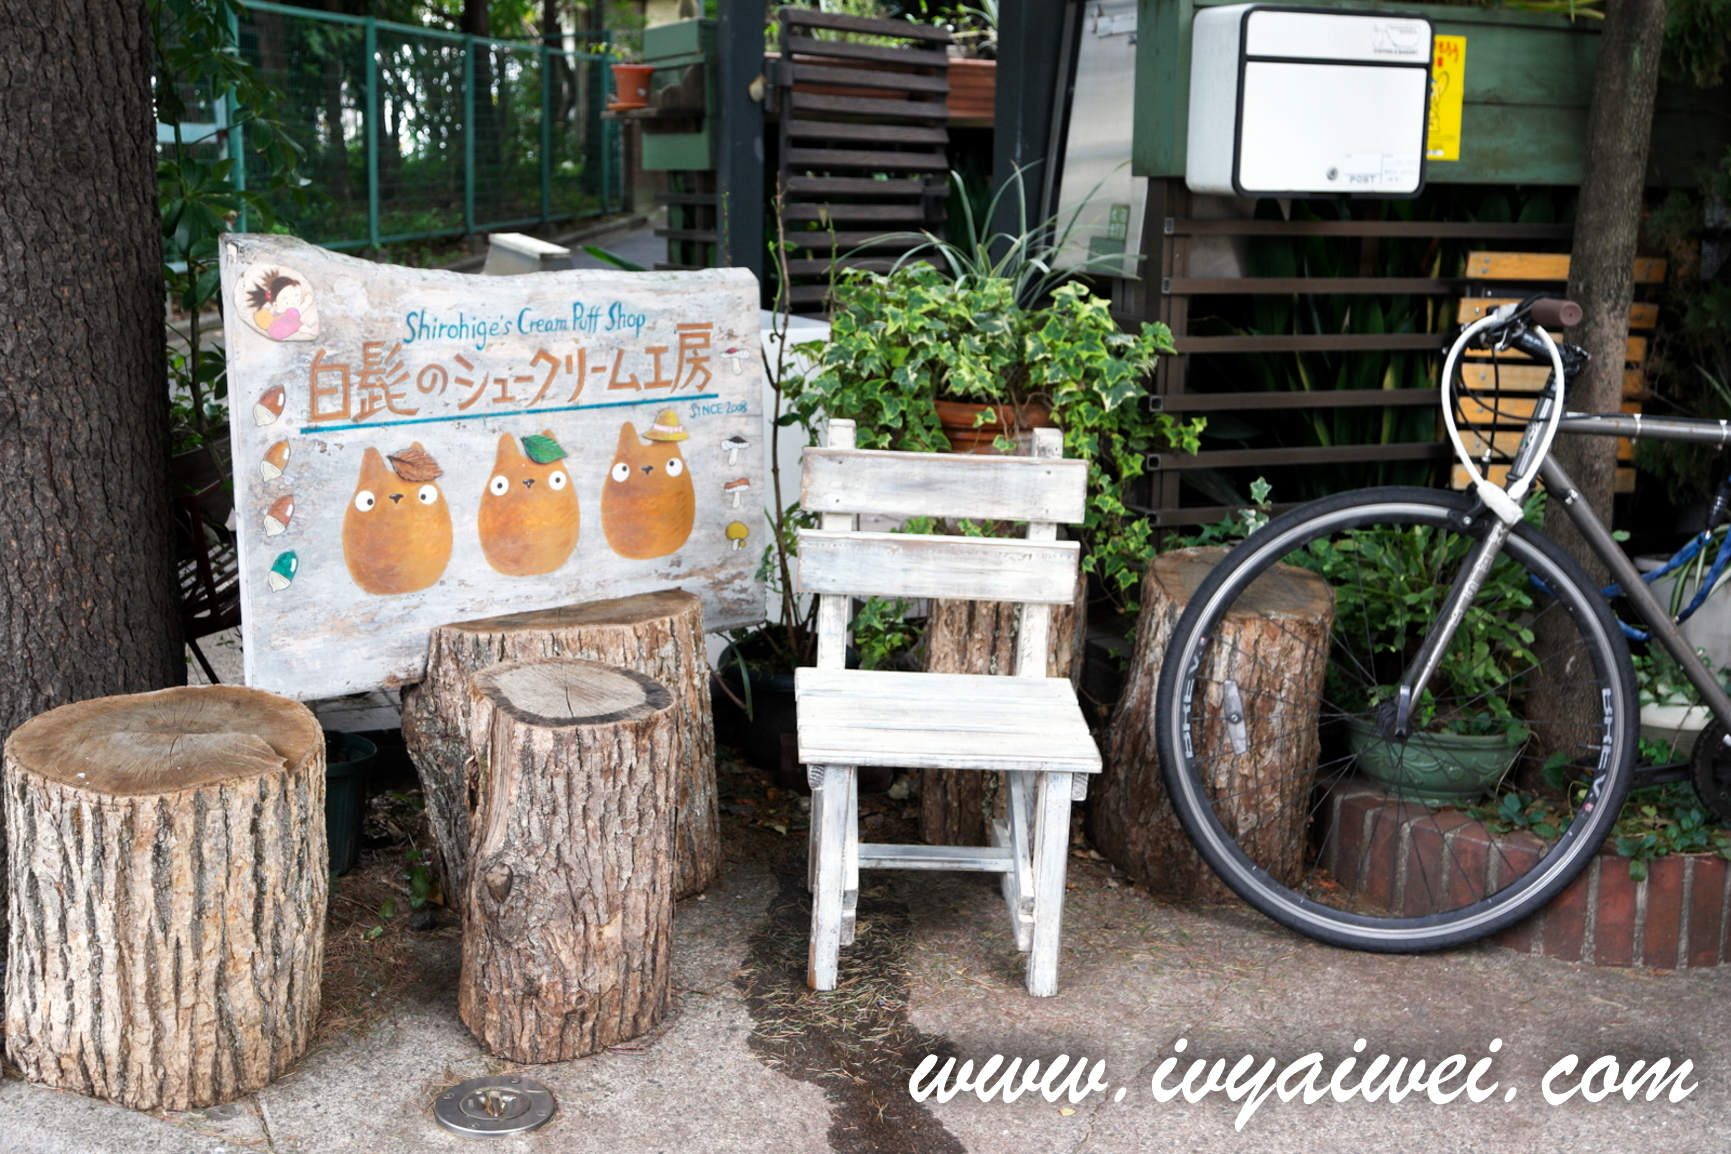 TOKYO: Shiro-hige’s Cream Puff Factory